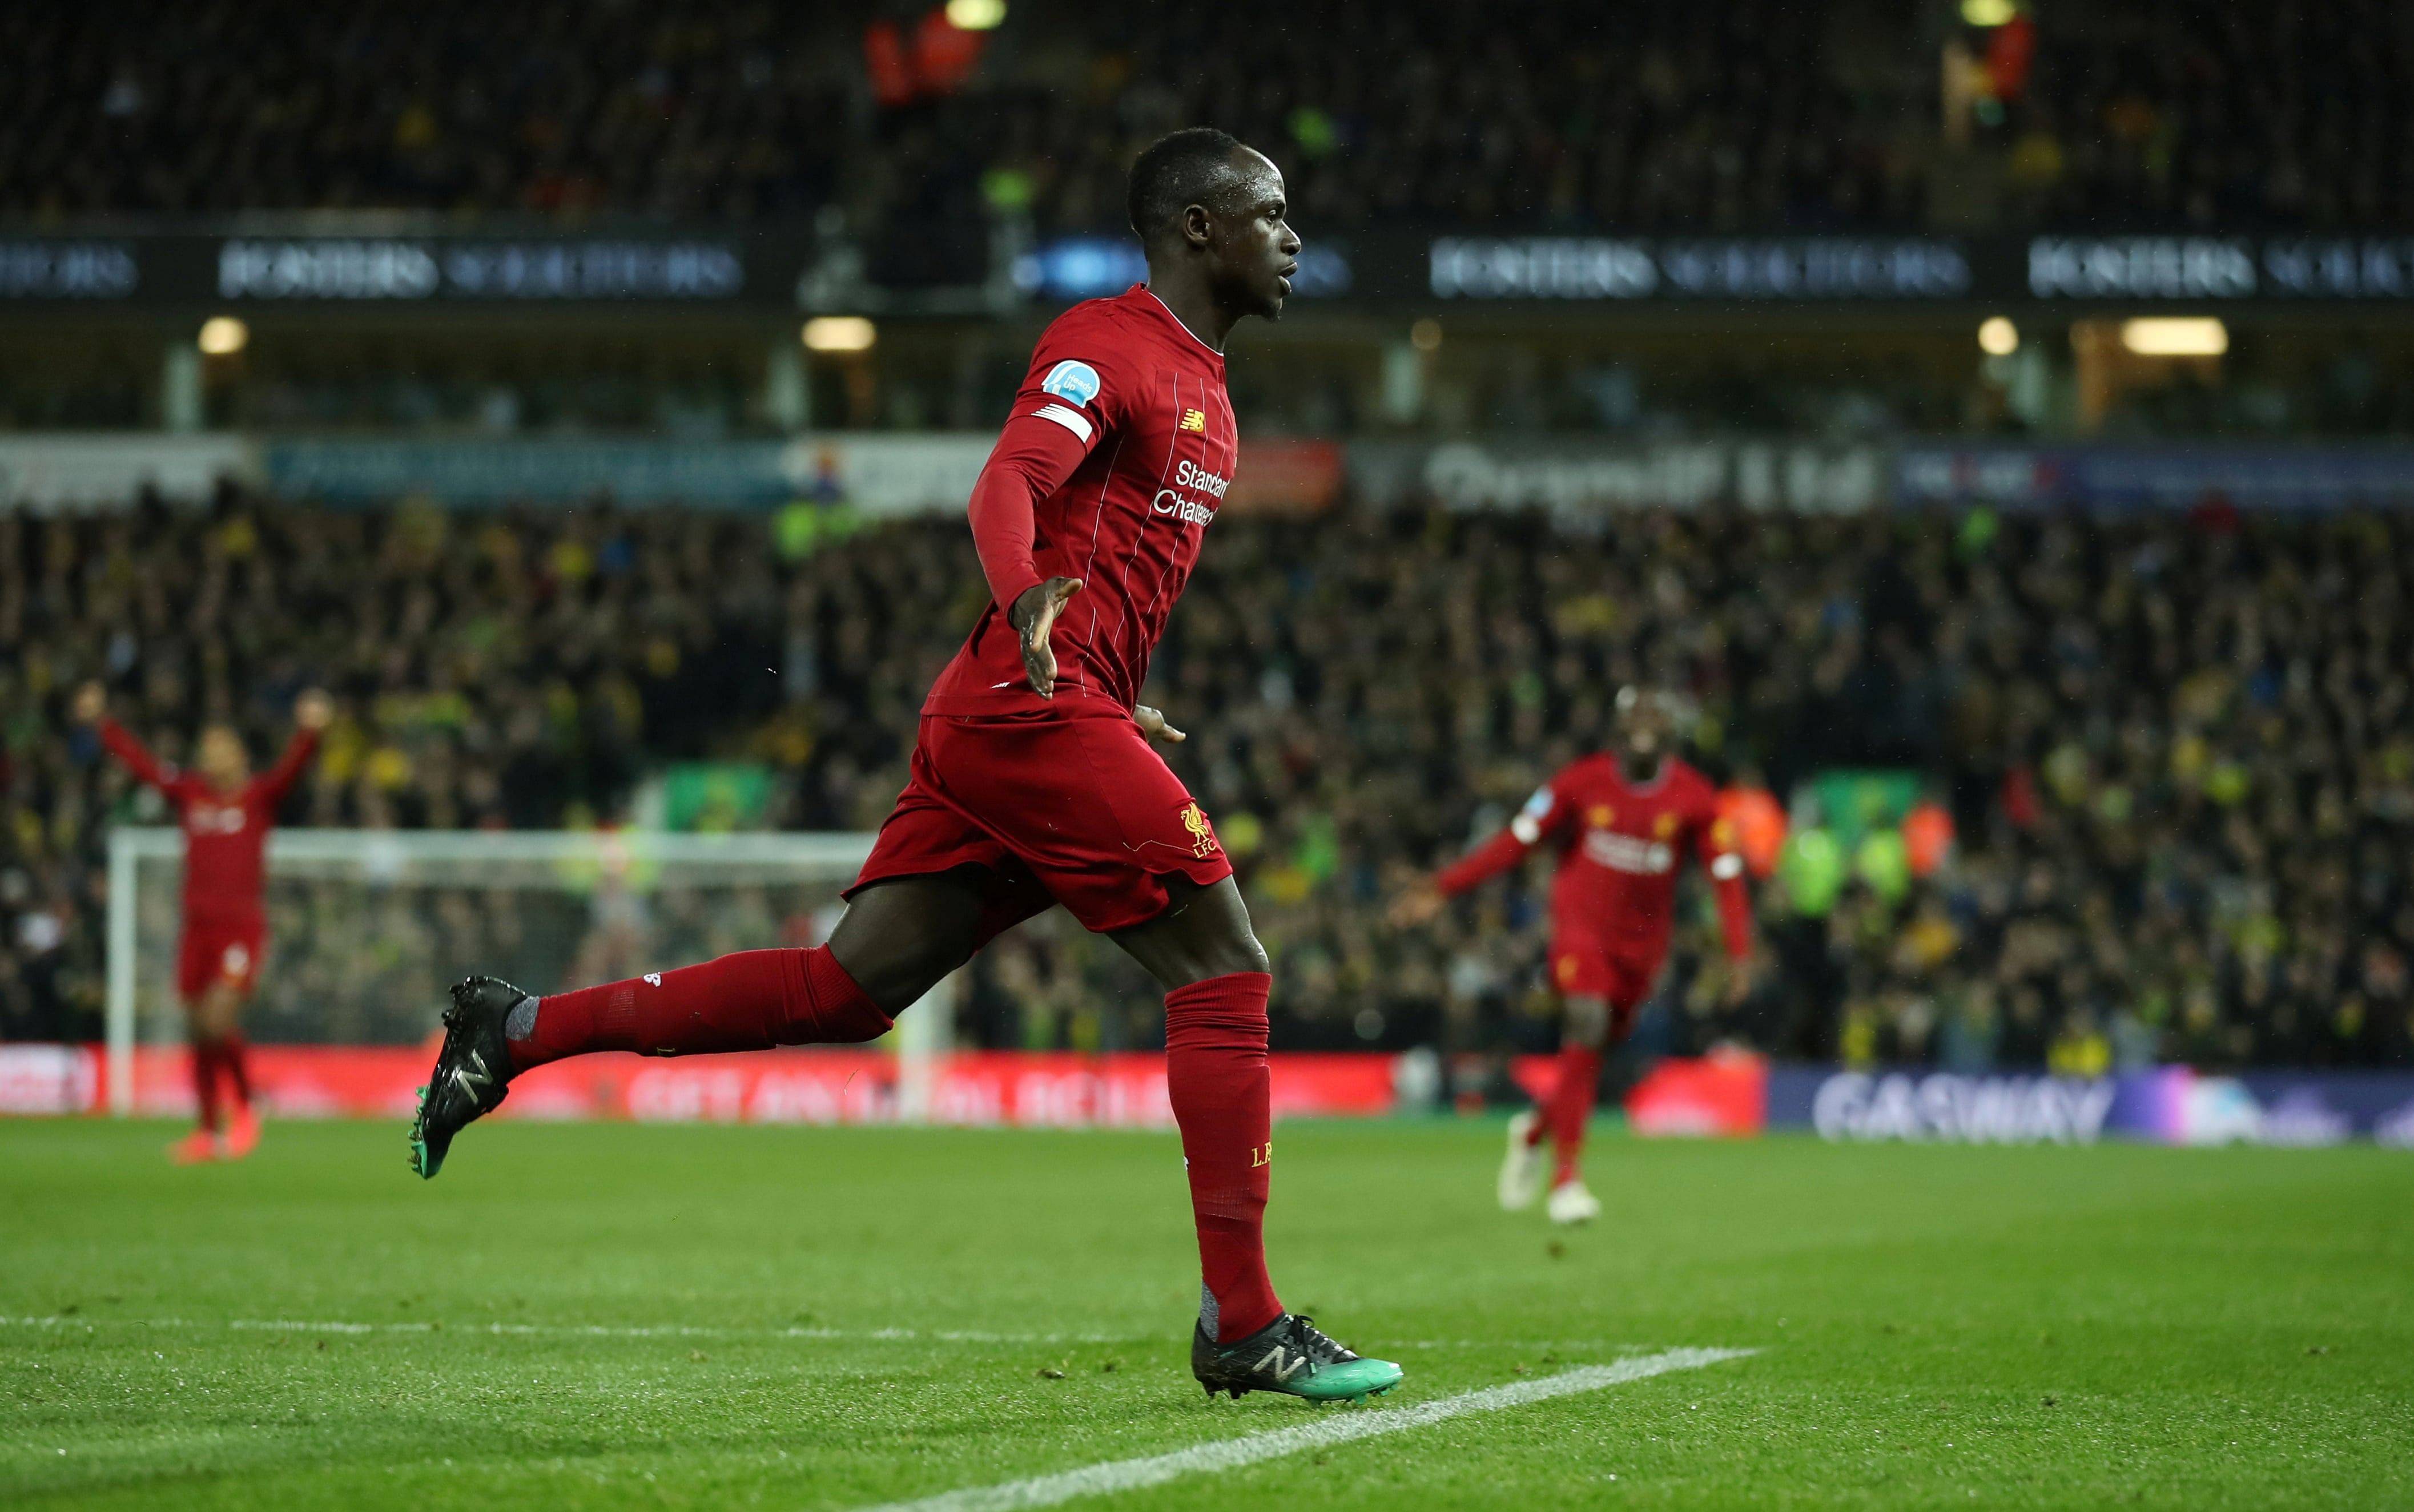 Liverpool's Sadio Mane celebrates scoring their first goal. (Credit: Reuters Photo)